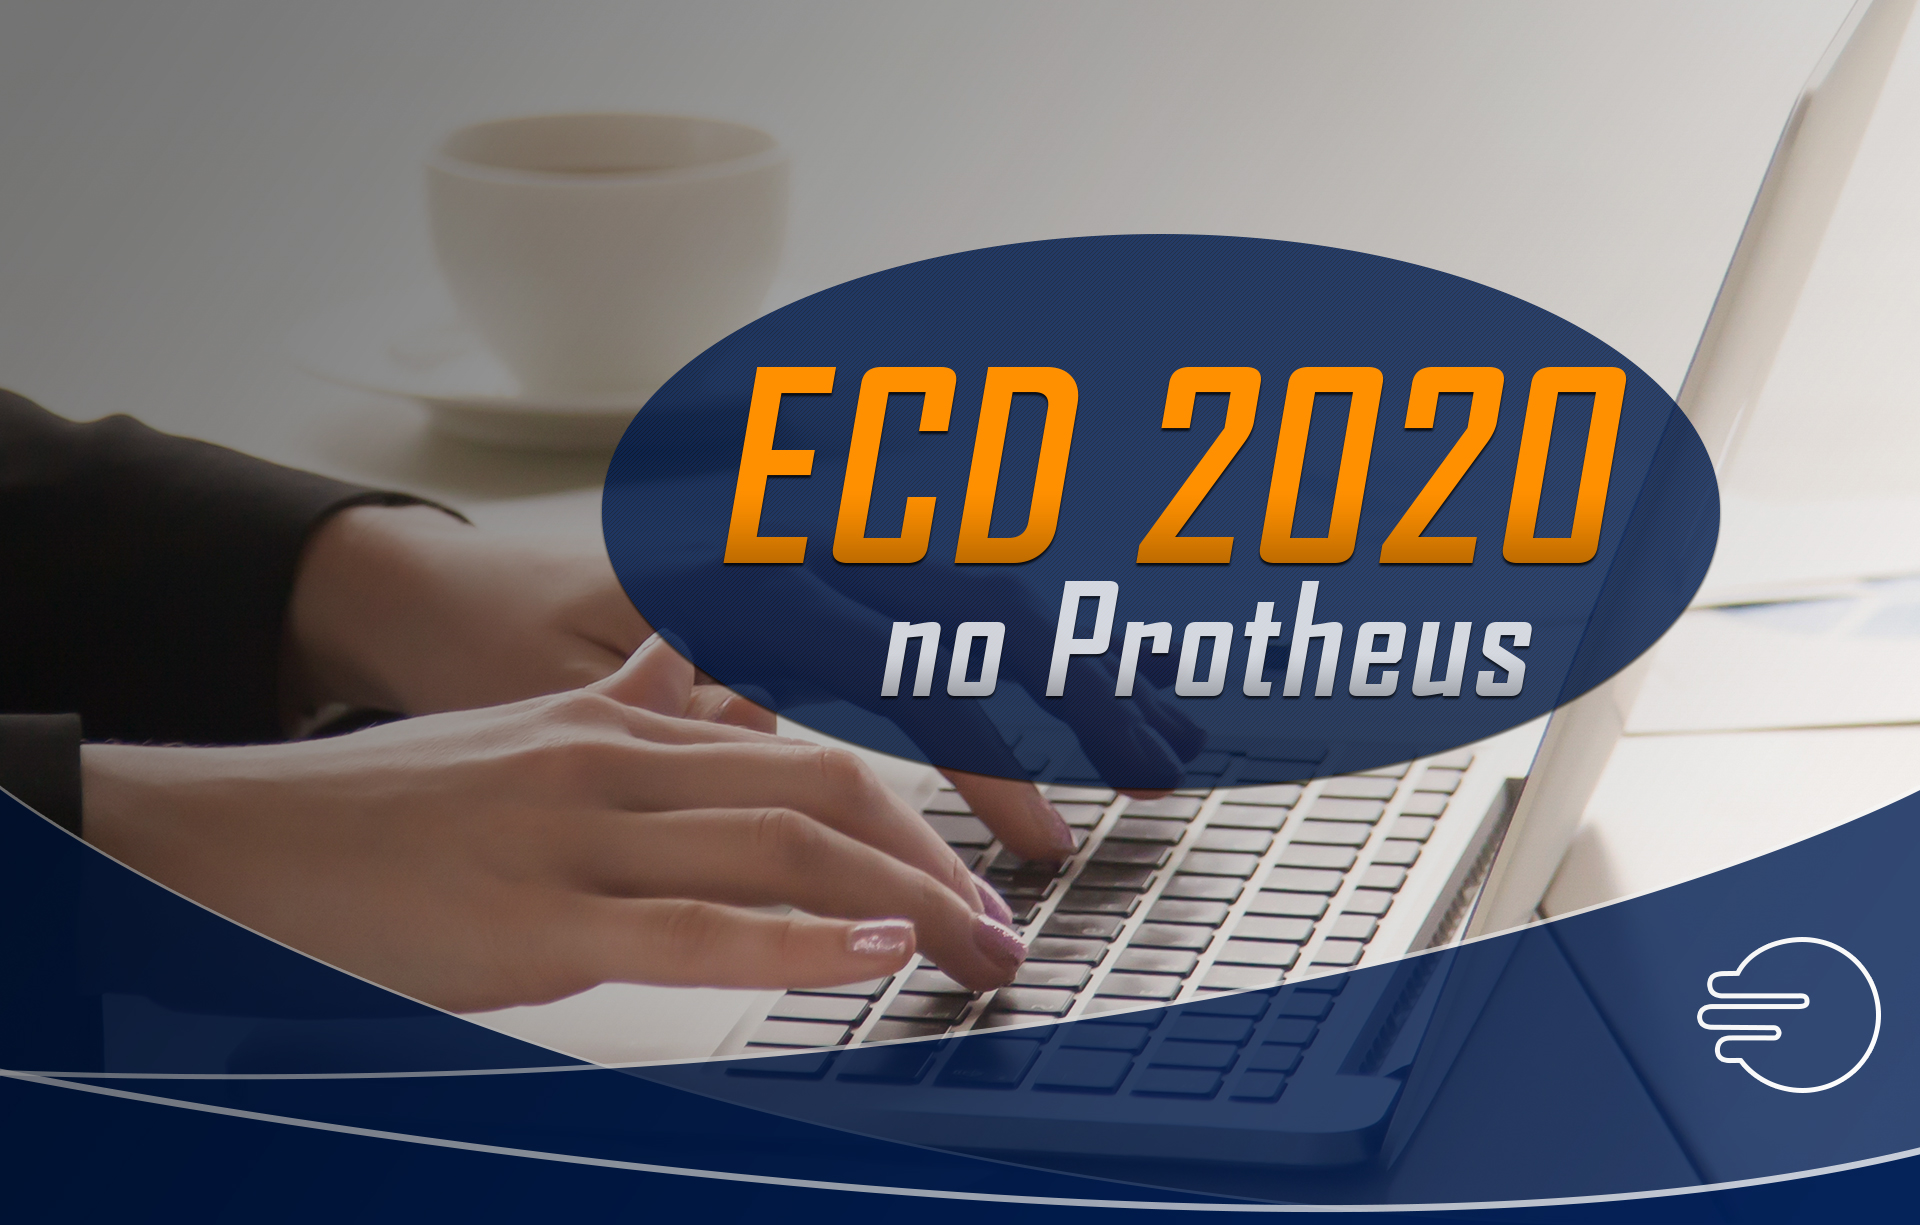 ECD 2020 no Protheus